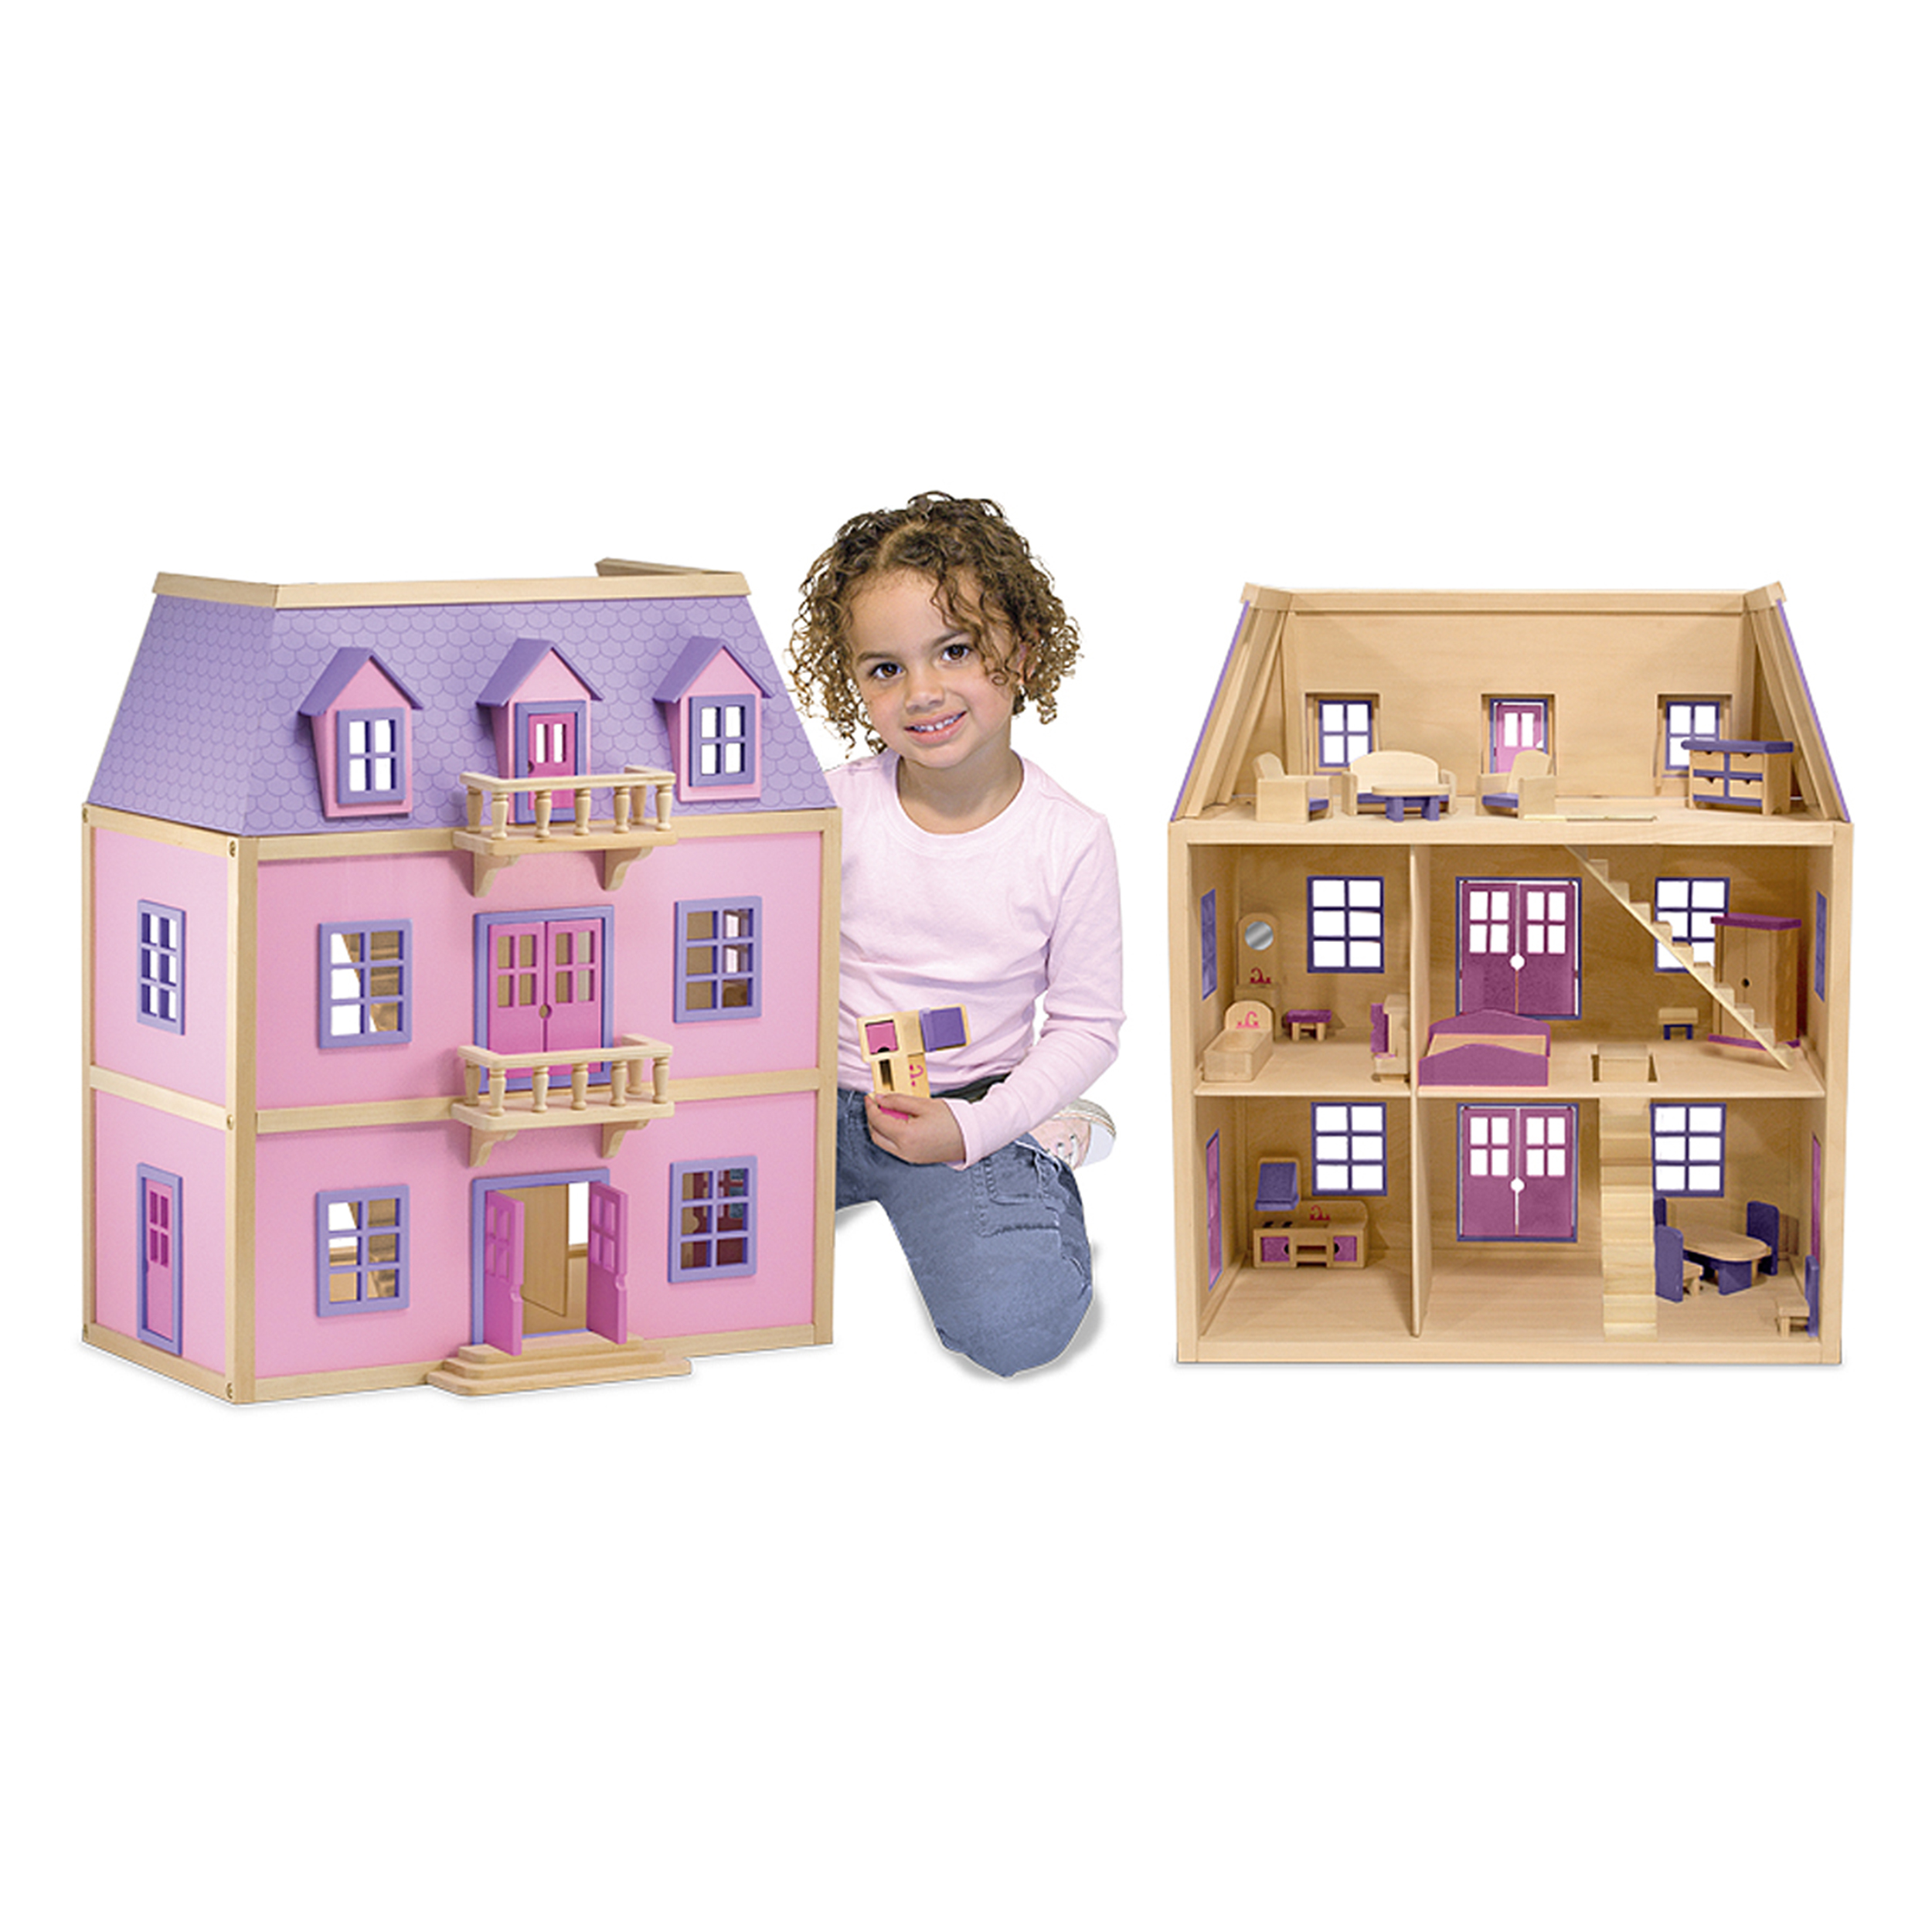 Melissa & Doug Multi-level Wooden Dollhouse